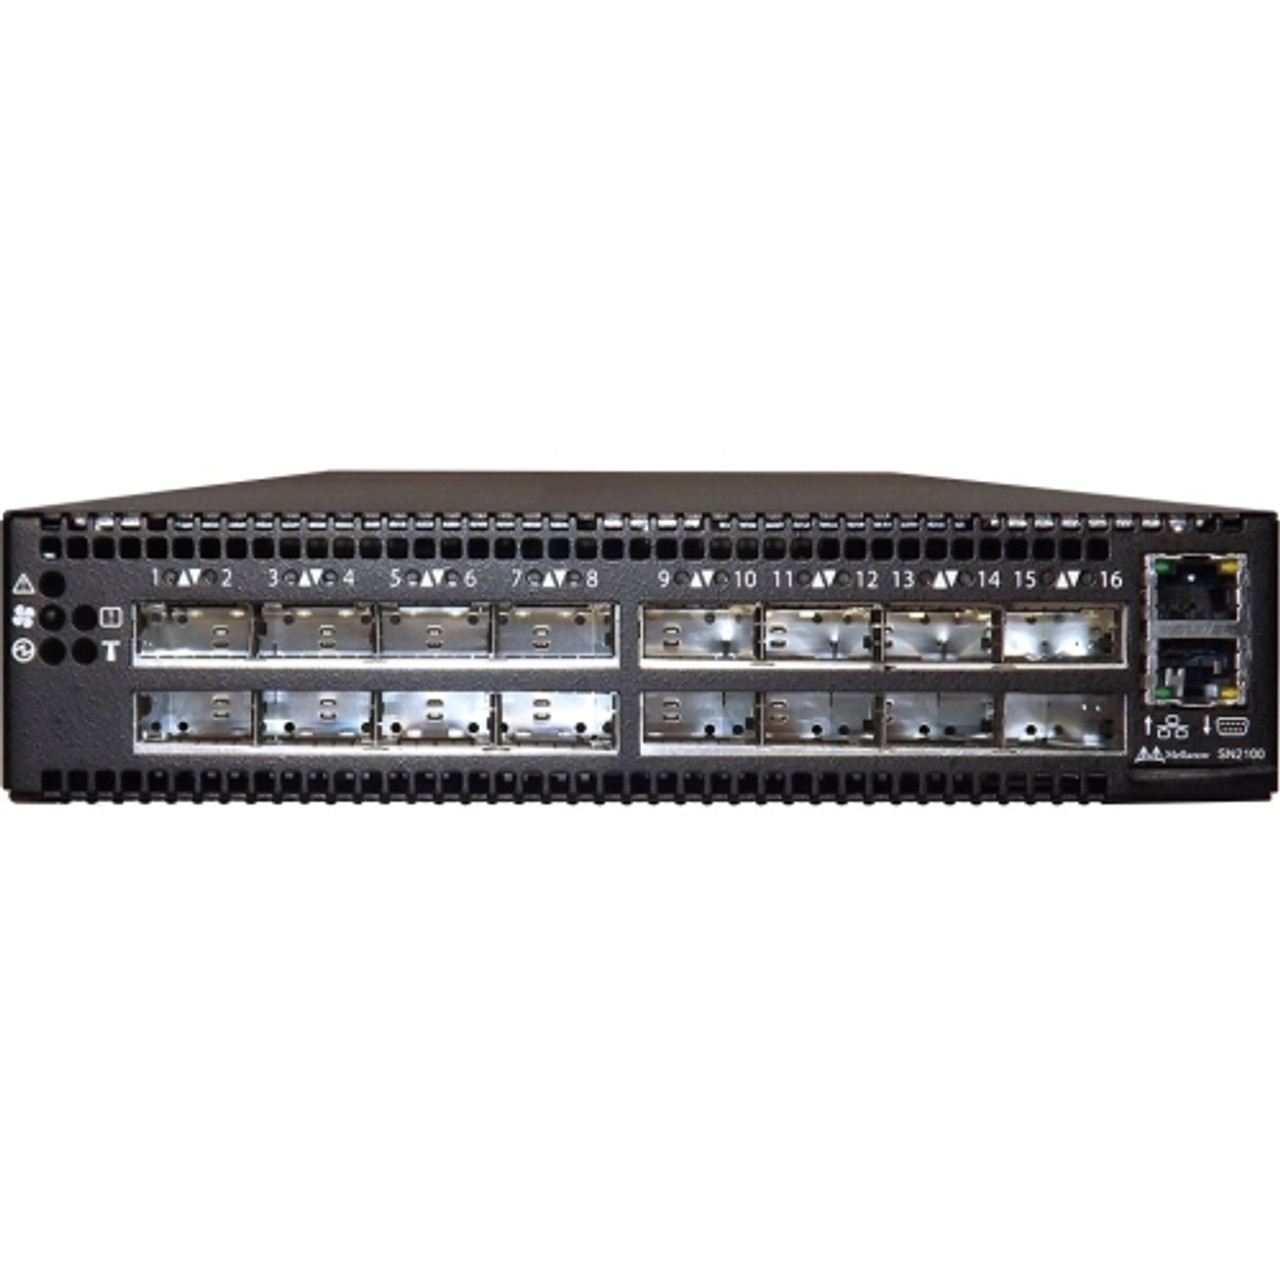 MSN2100-BB2F Mellanox Spectrum Based 40Gbps 1u Open Ethernet Switch W/ Cumulus Linux 16 Qsfp28 Ports (Refurbished)